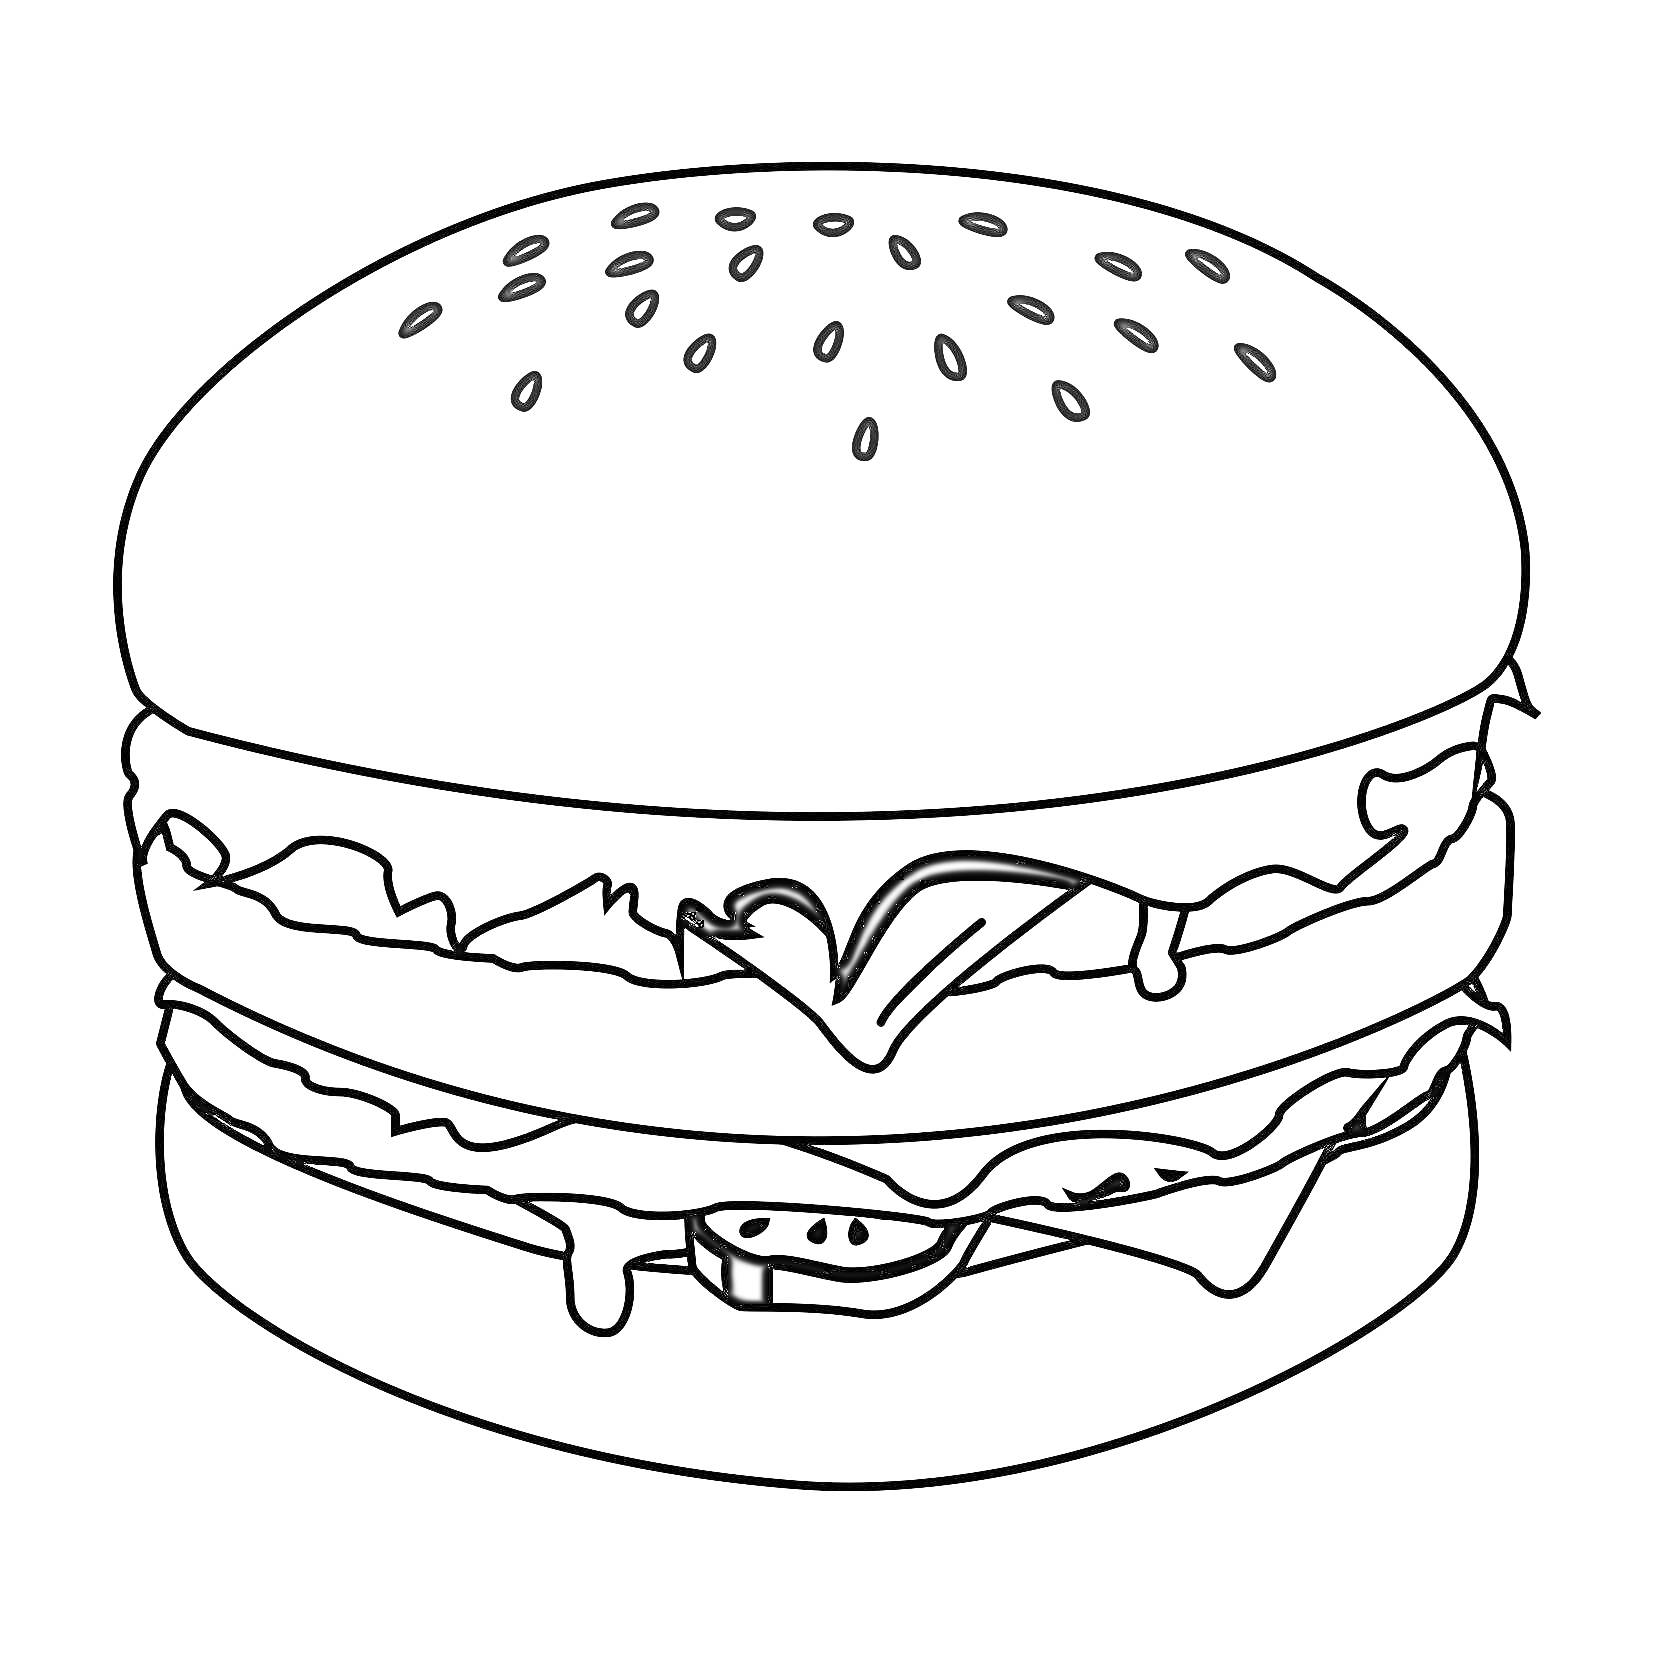 На раскраске изображено: Бургер, Листья салата, Соус, Еда, Бутерброд, Помидор, Закуски